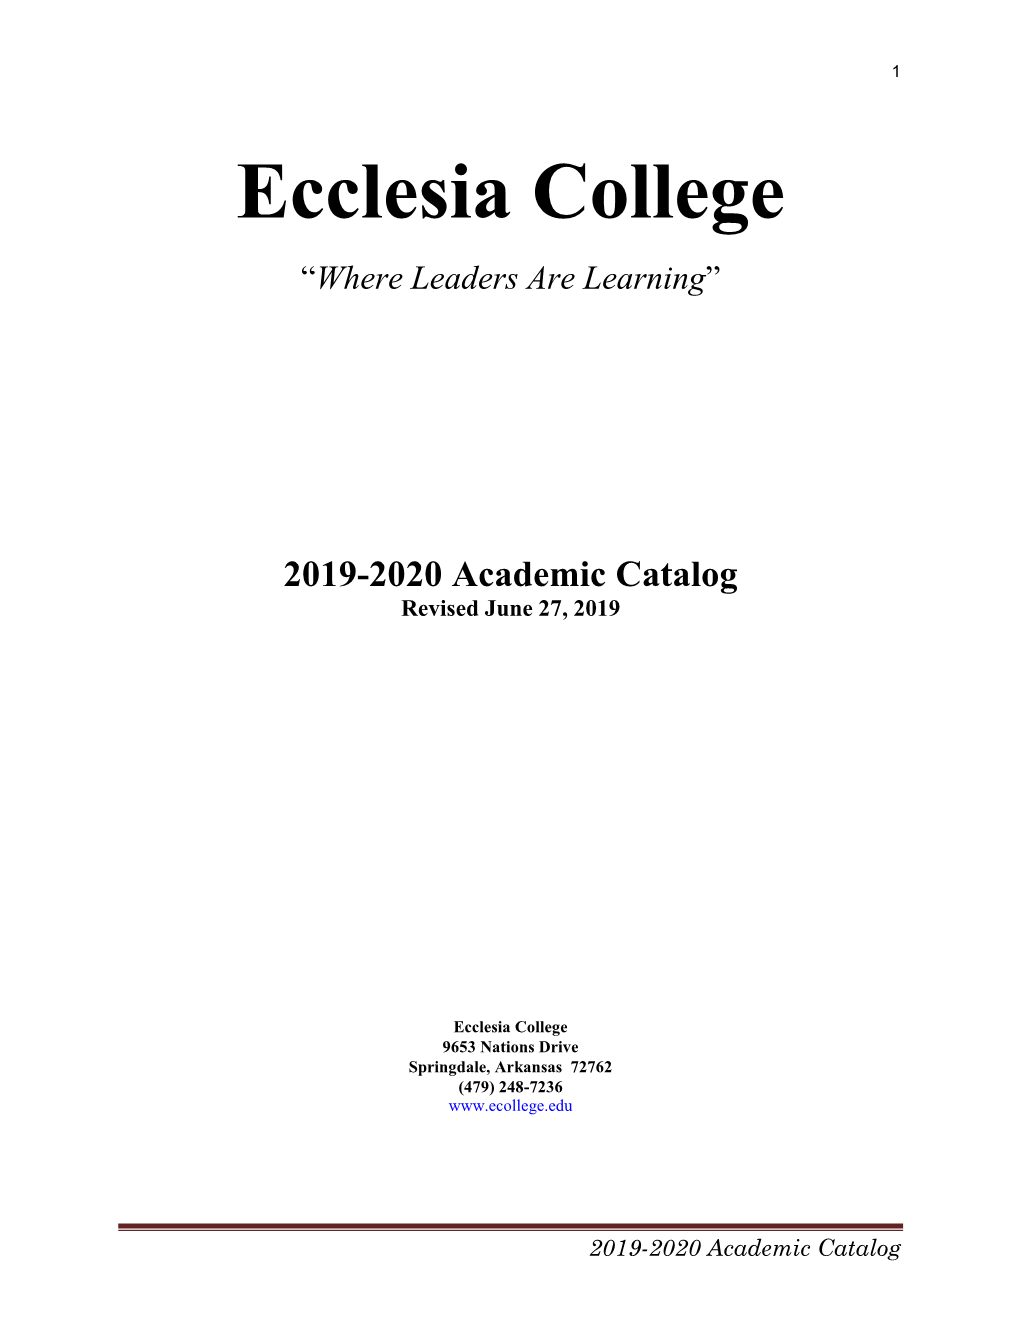 2019-2020 Academic Catalog Revised June 27, 2019